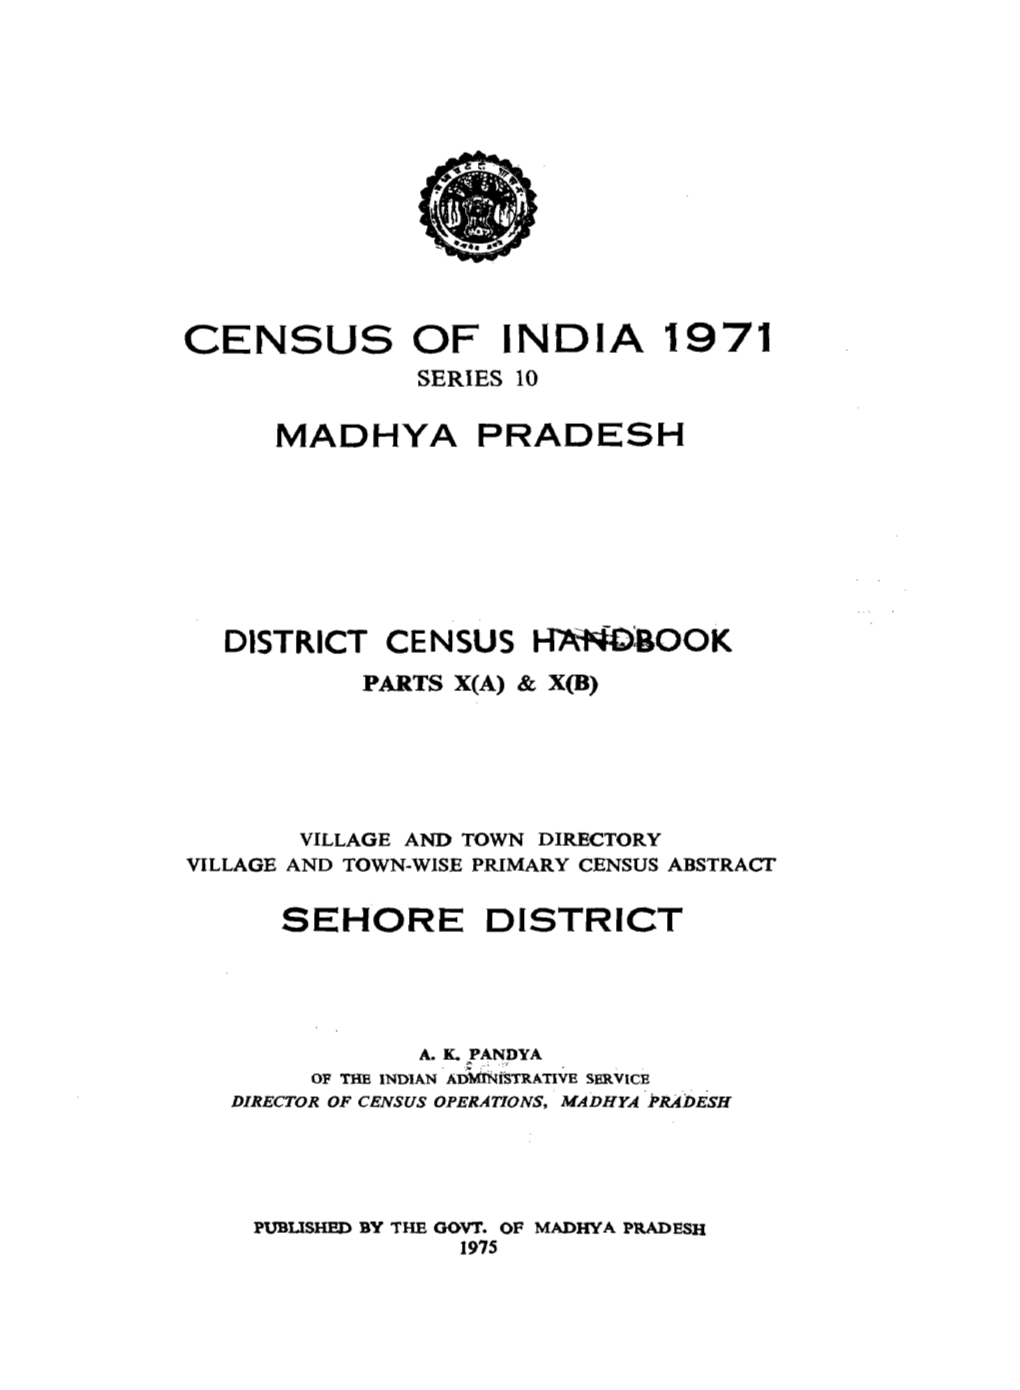 District Census Handbook, Sehore, Parts X (A) &